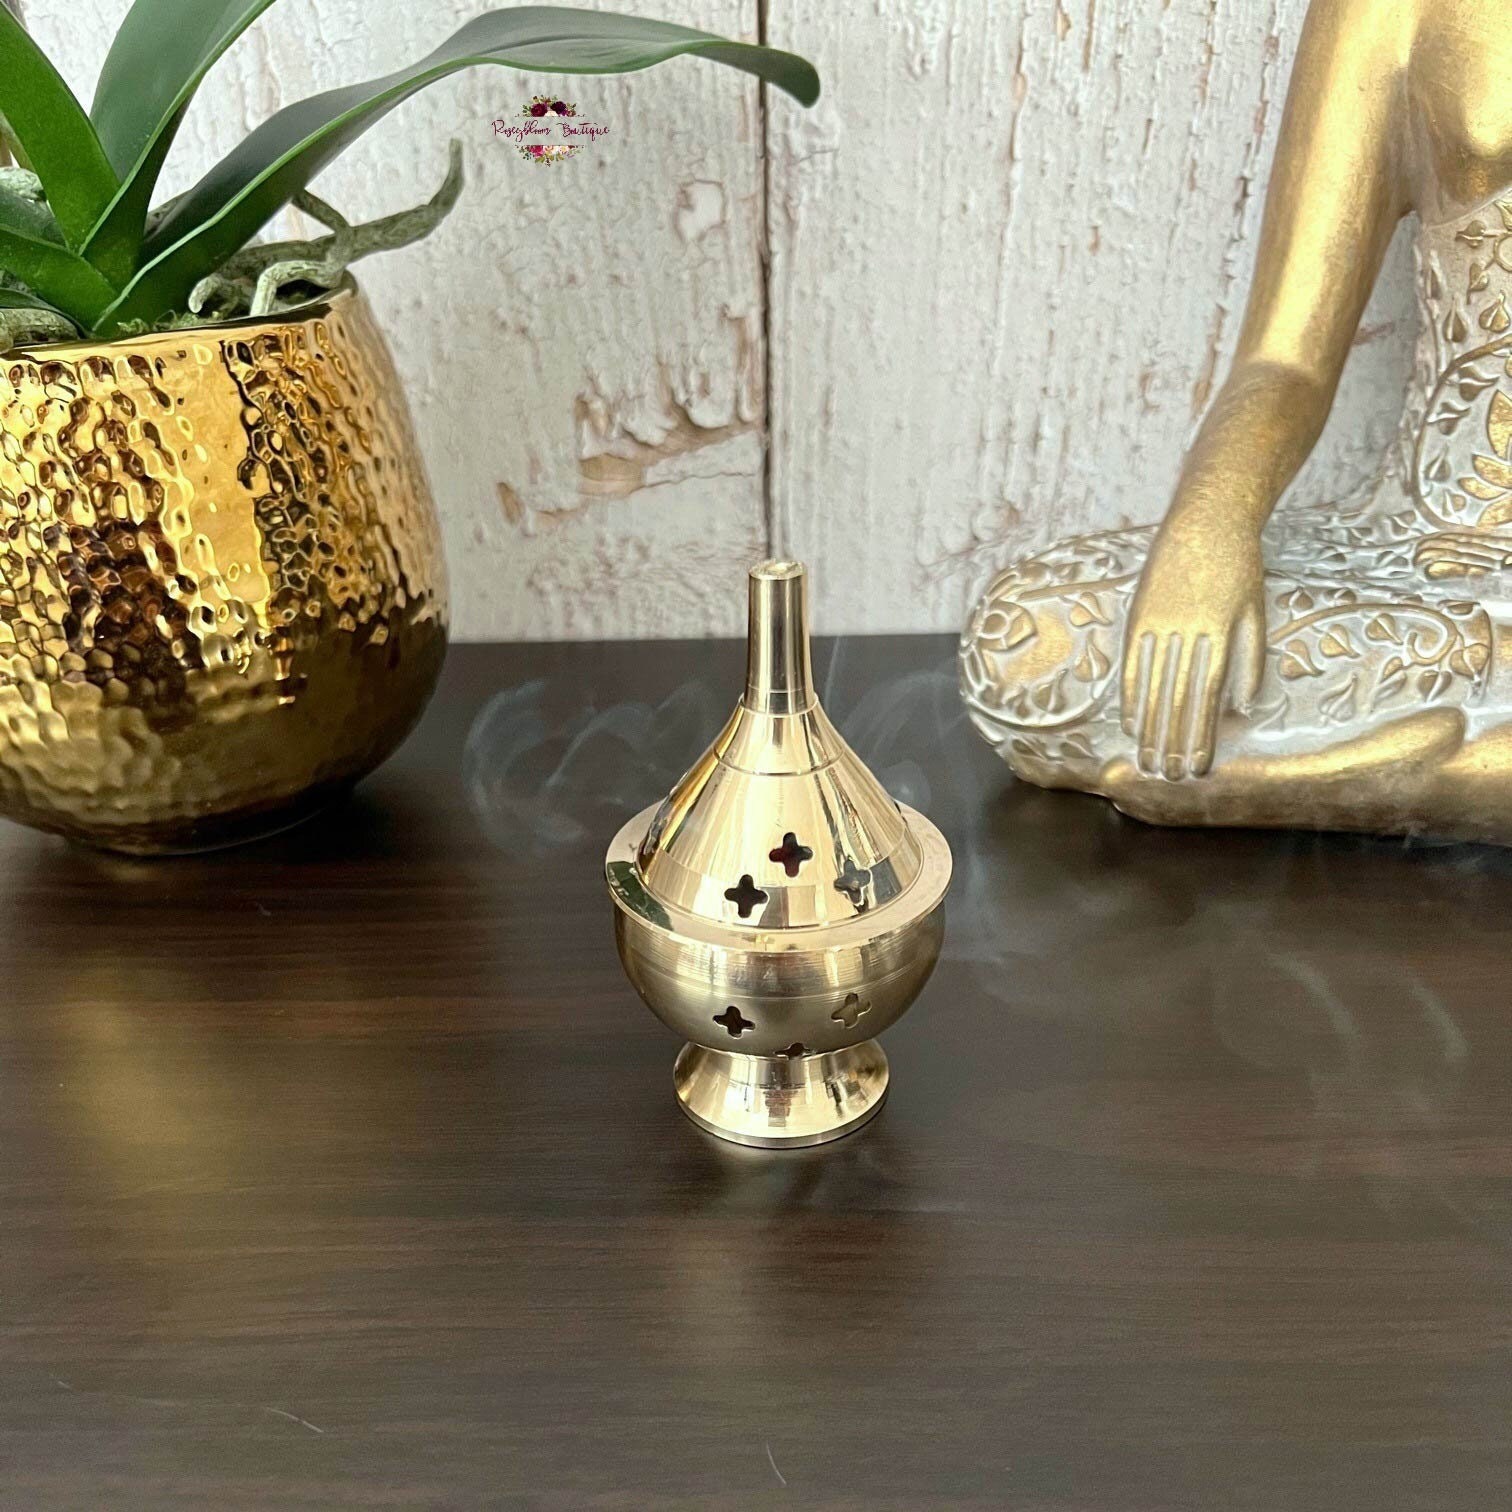 Should you choose a cone incense or a stick incense? –